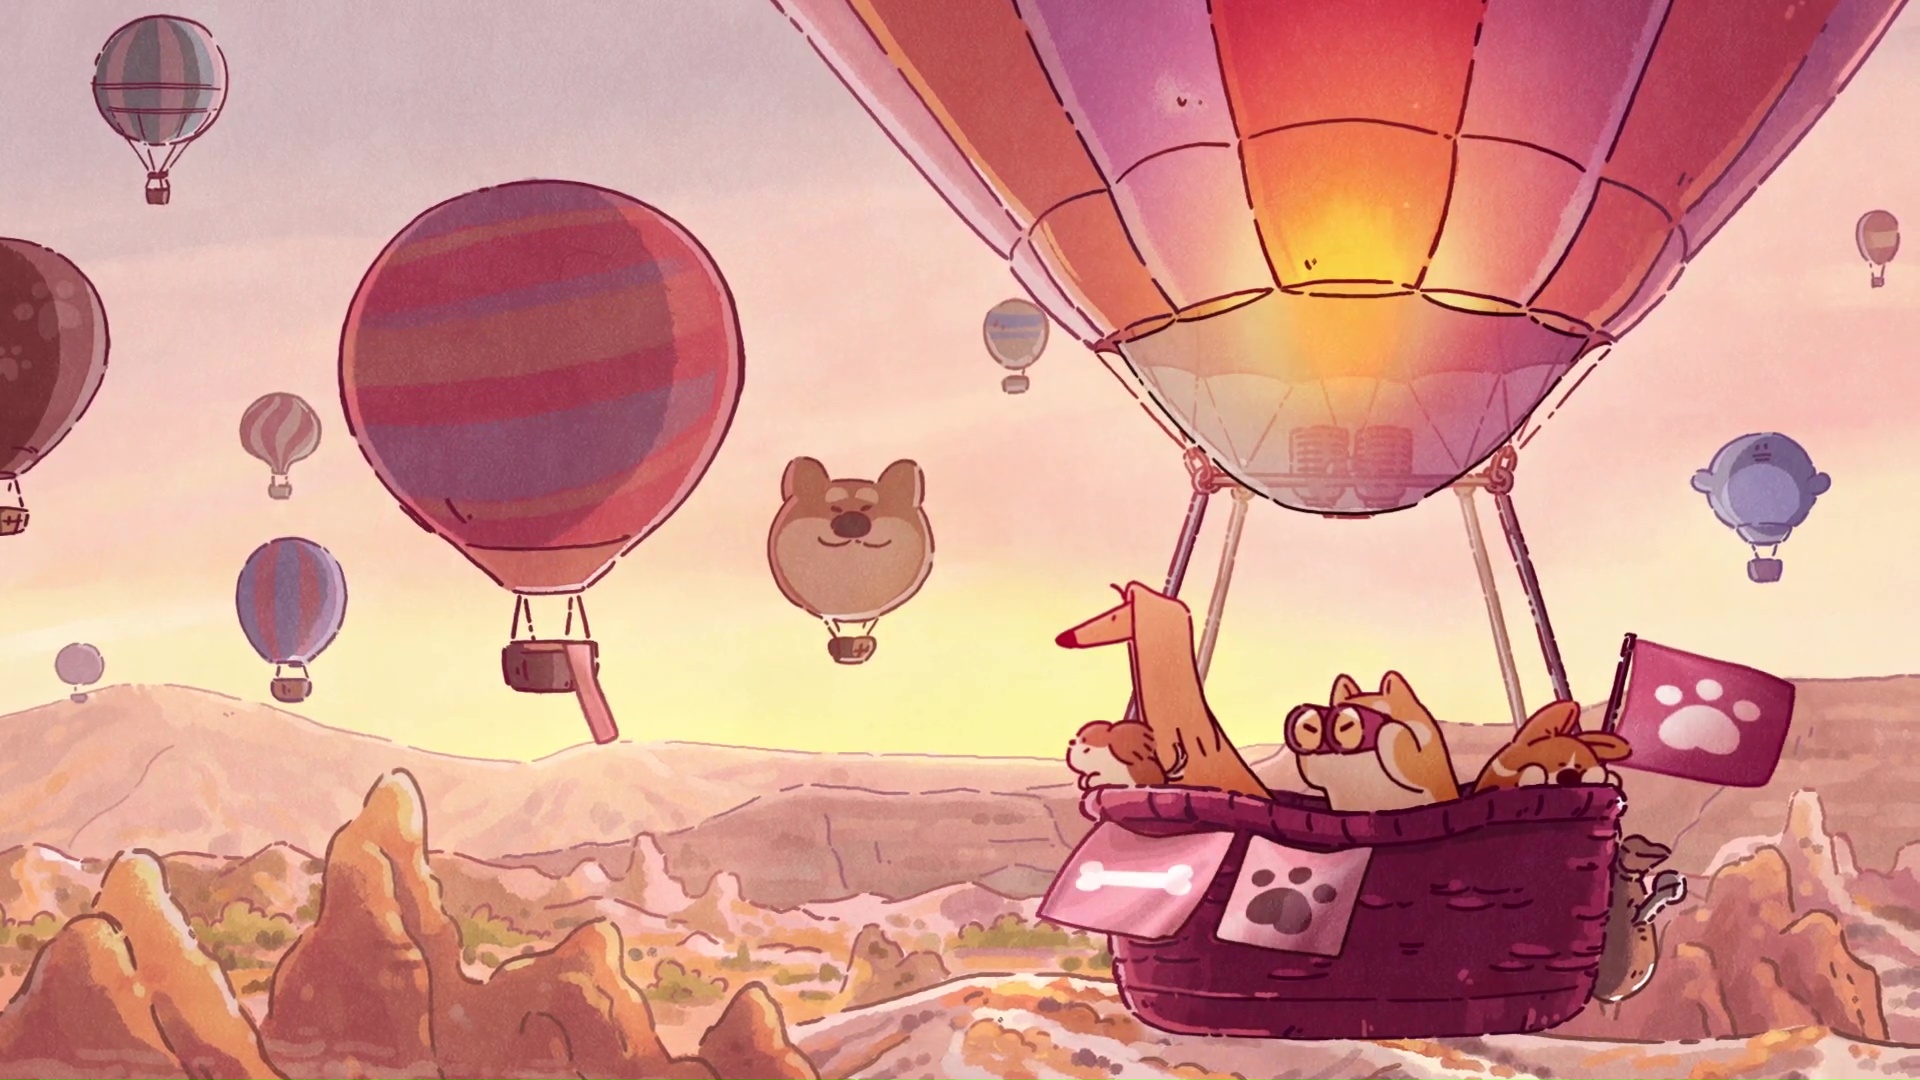 Doggie Corgi On Hot Air Balloon Live Wallpaper - HDLiveWall.com